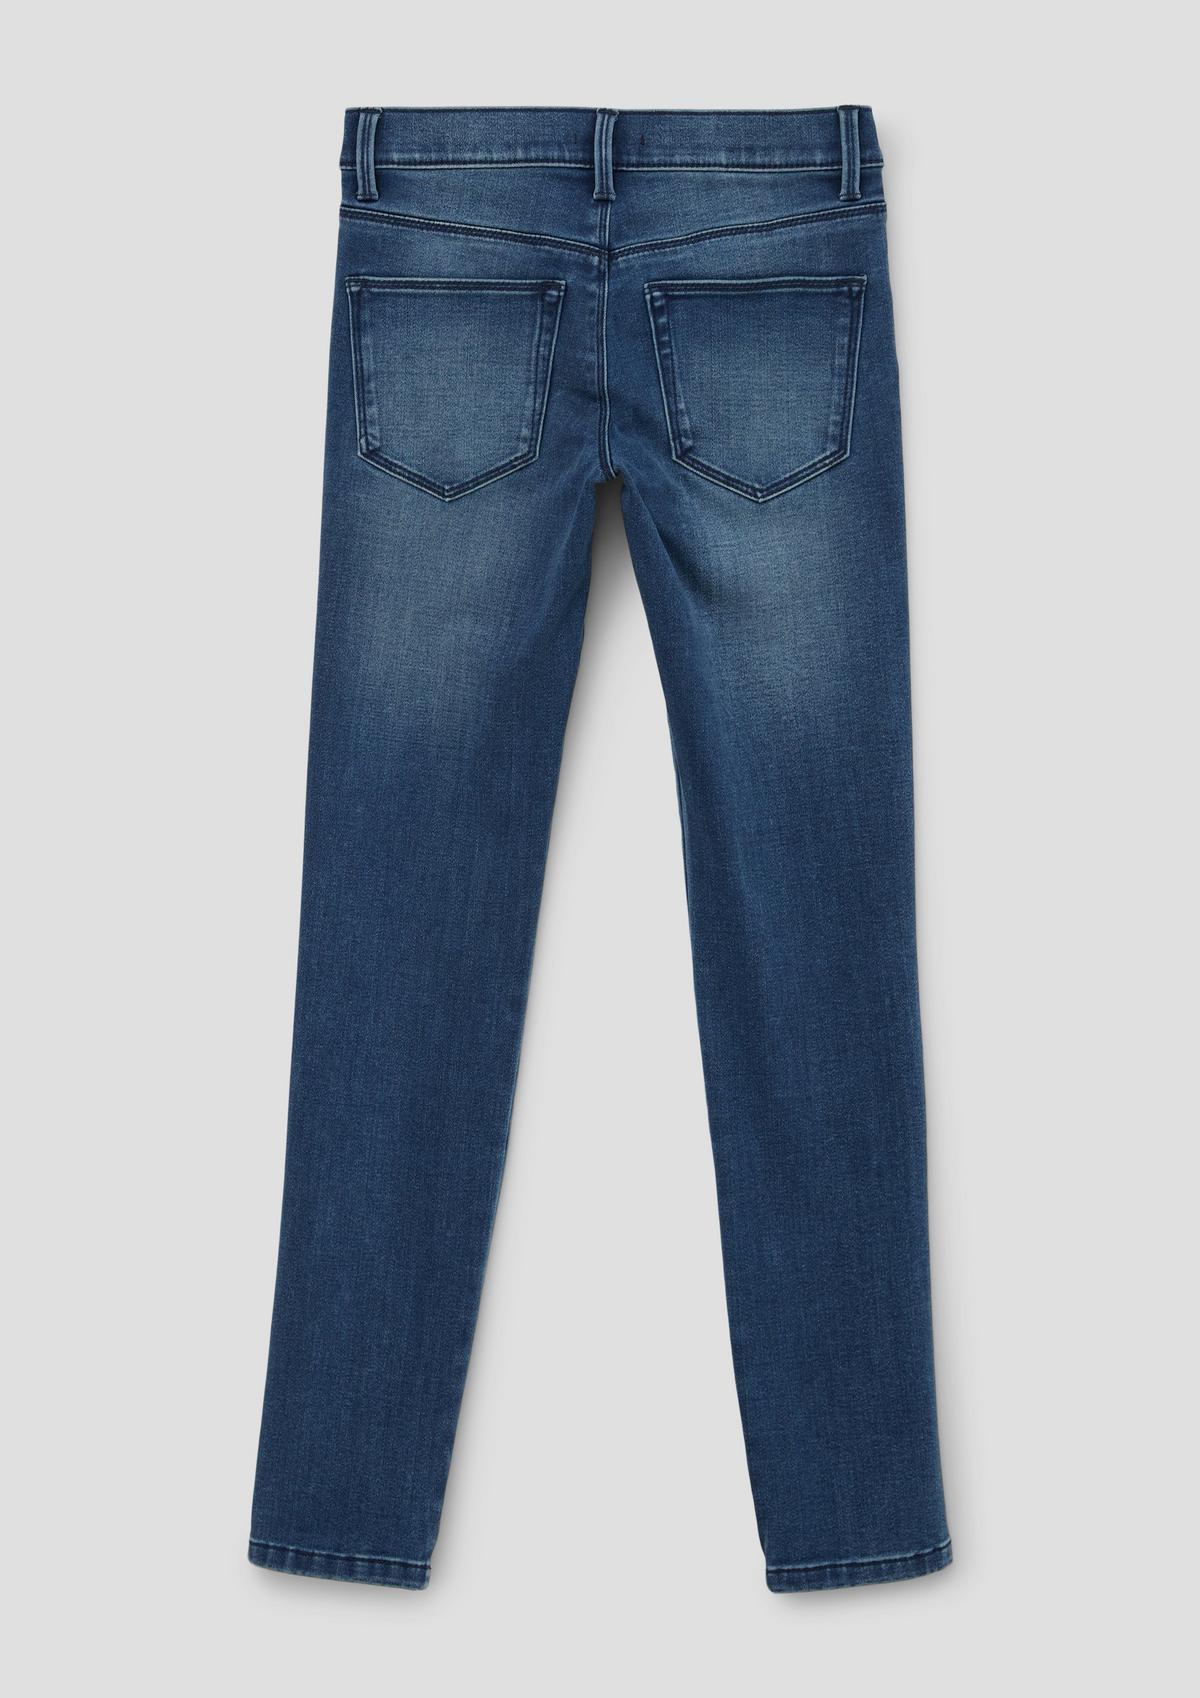 s.Oliver Suri jeans / regular fit / mid rise / slim leg